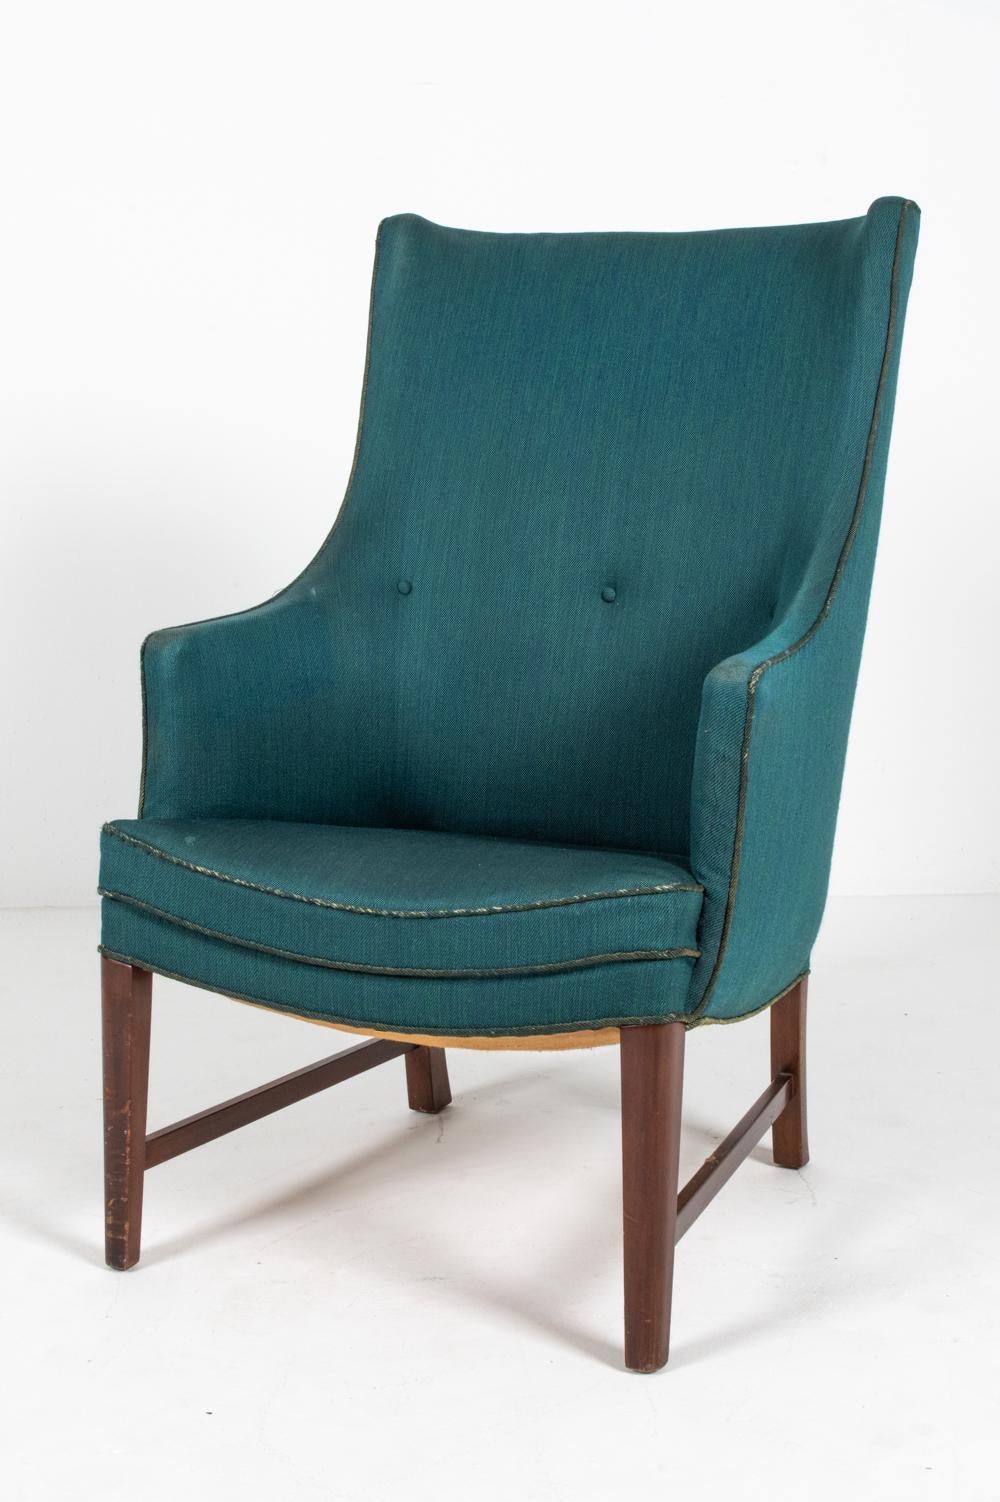 Mahogany Frits Henningsen Danish Highback Lounge Chair, c. 1940's For Sale